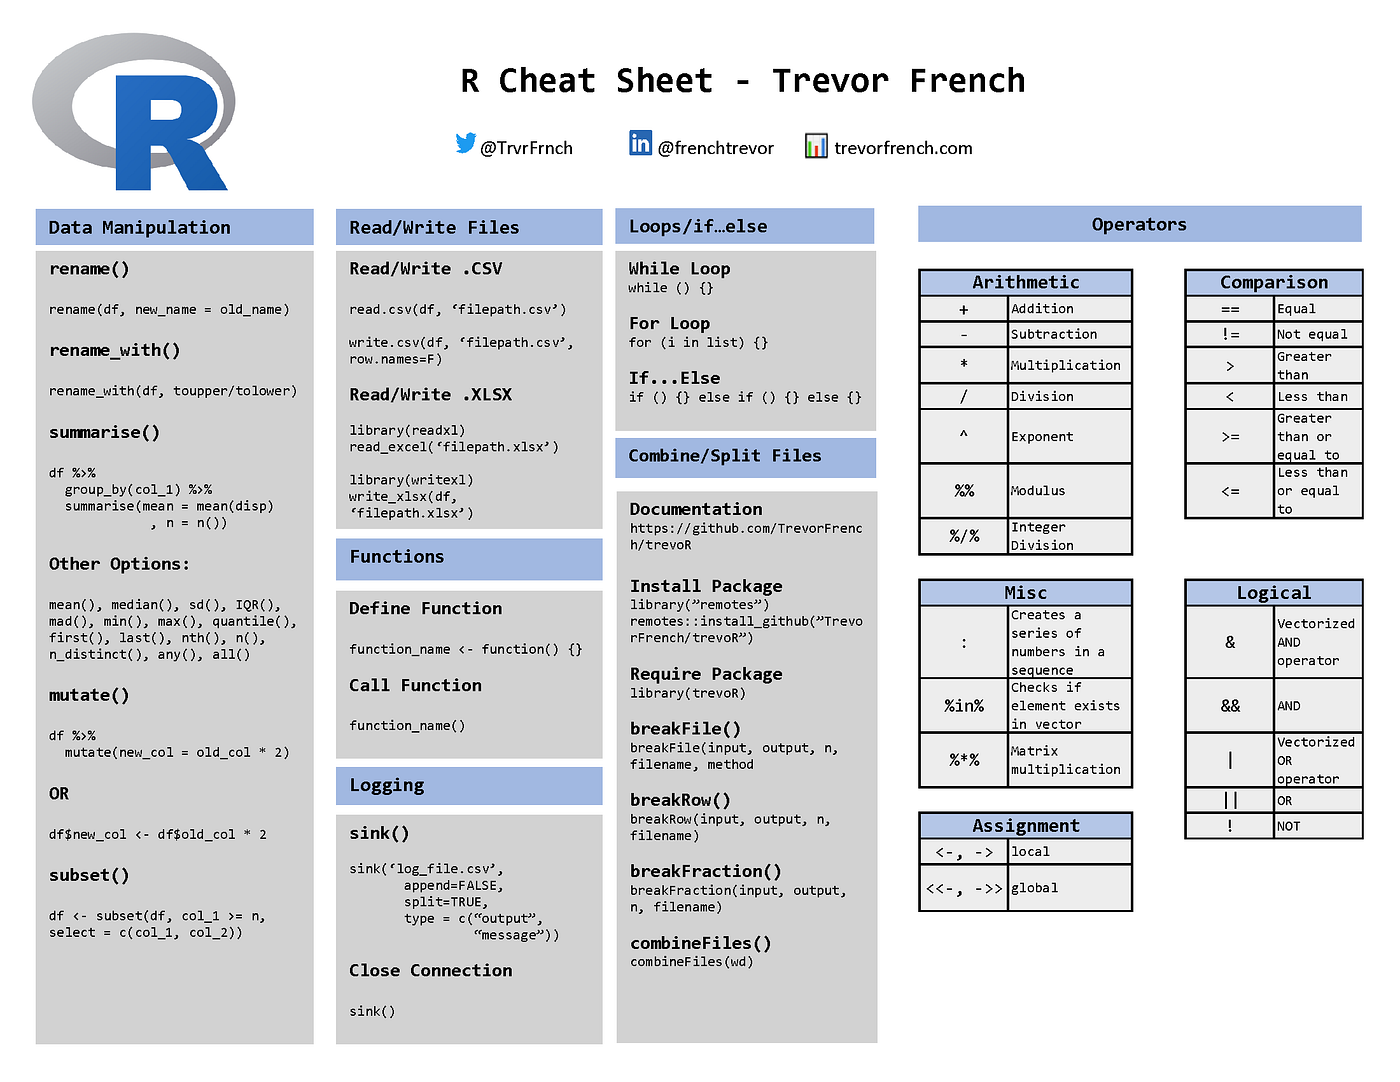 R Cheat Sheet - Trevor French - Medium